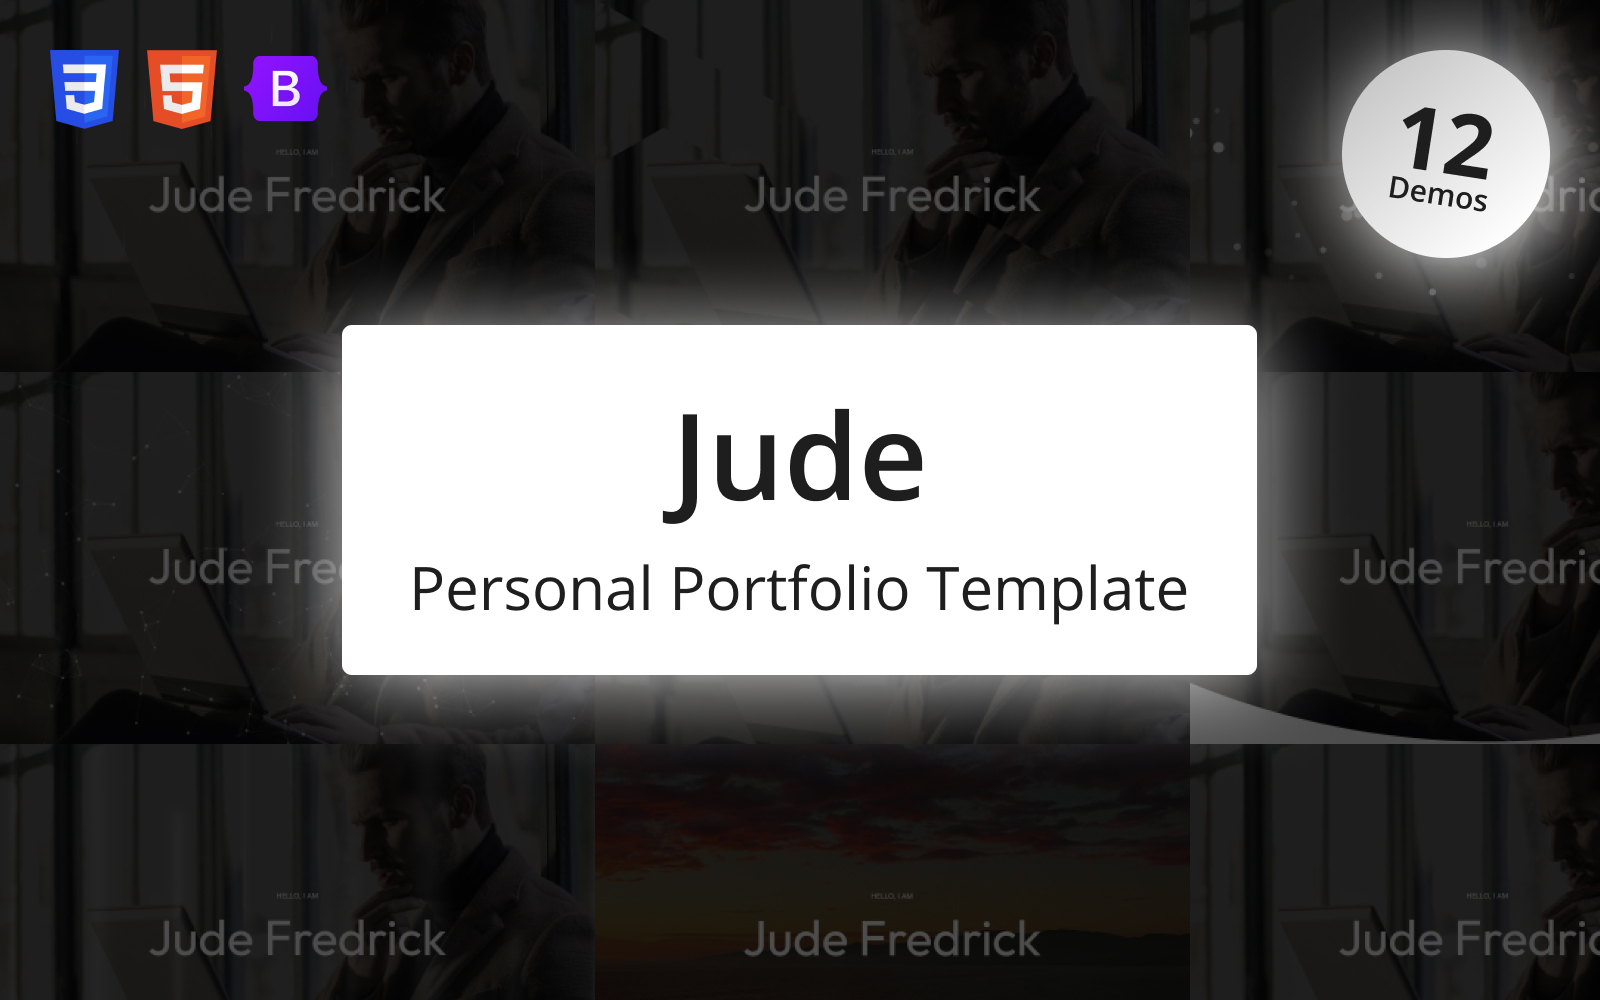 Jude - Personal Portfolio Landing Page Template